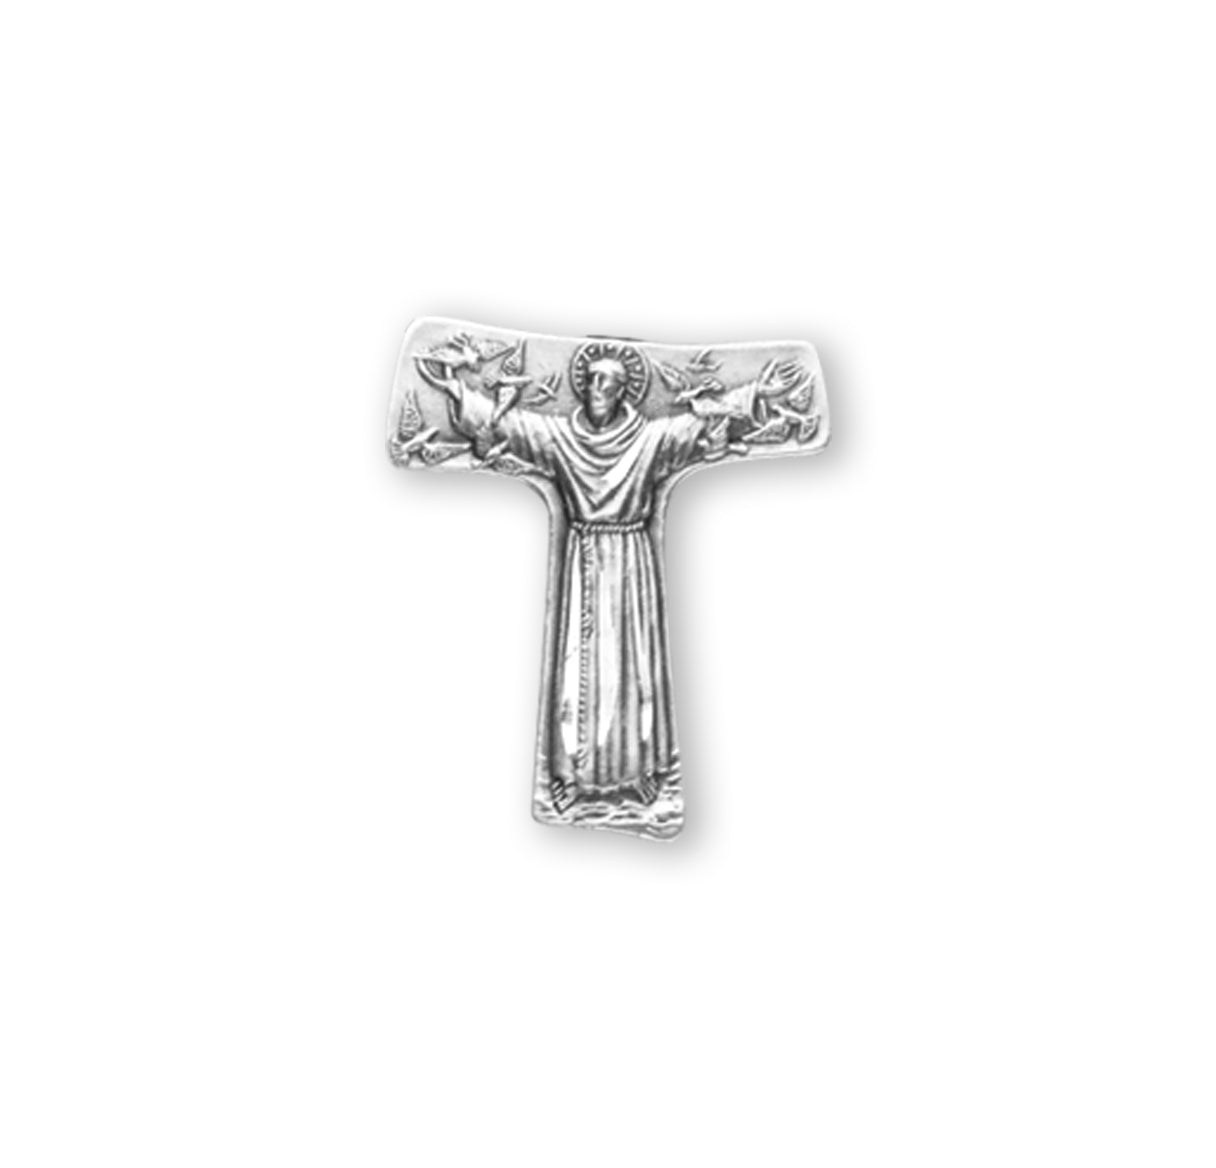 Saint Francis of Assisi "Tau" Sterling Silver Cross Lapel Pin